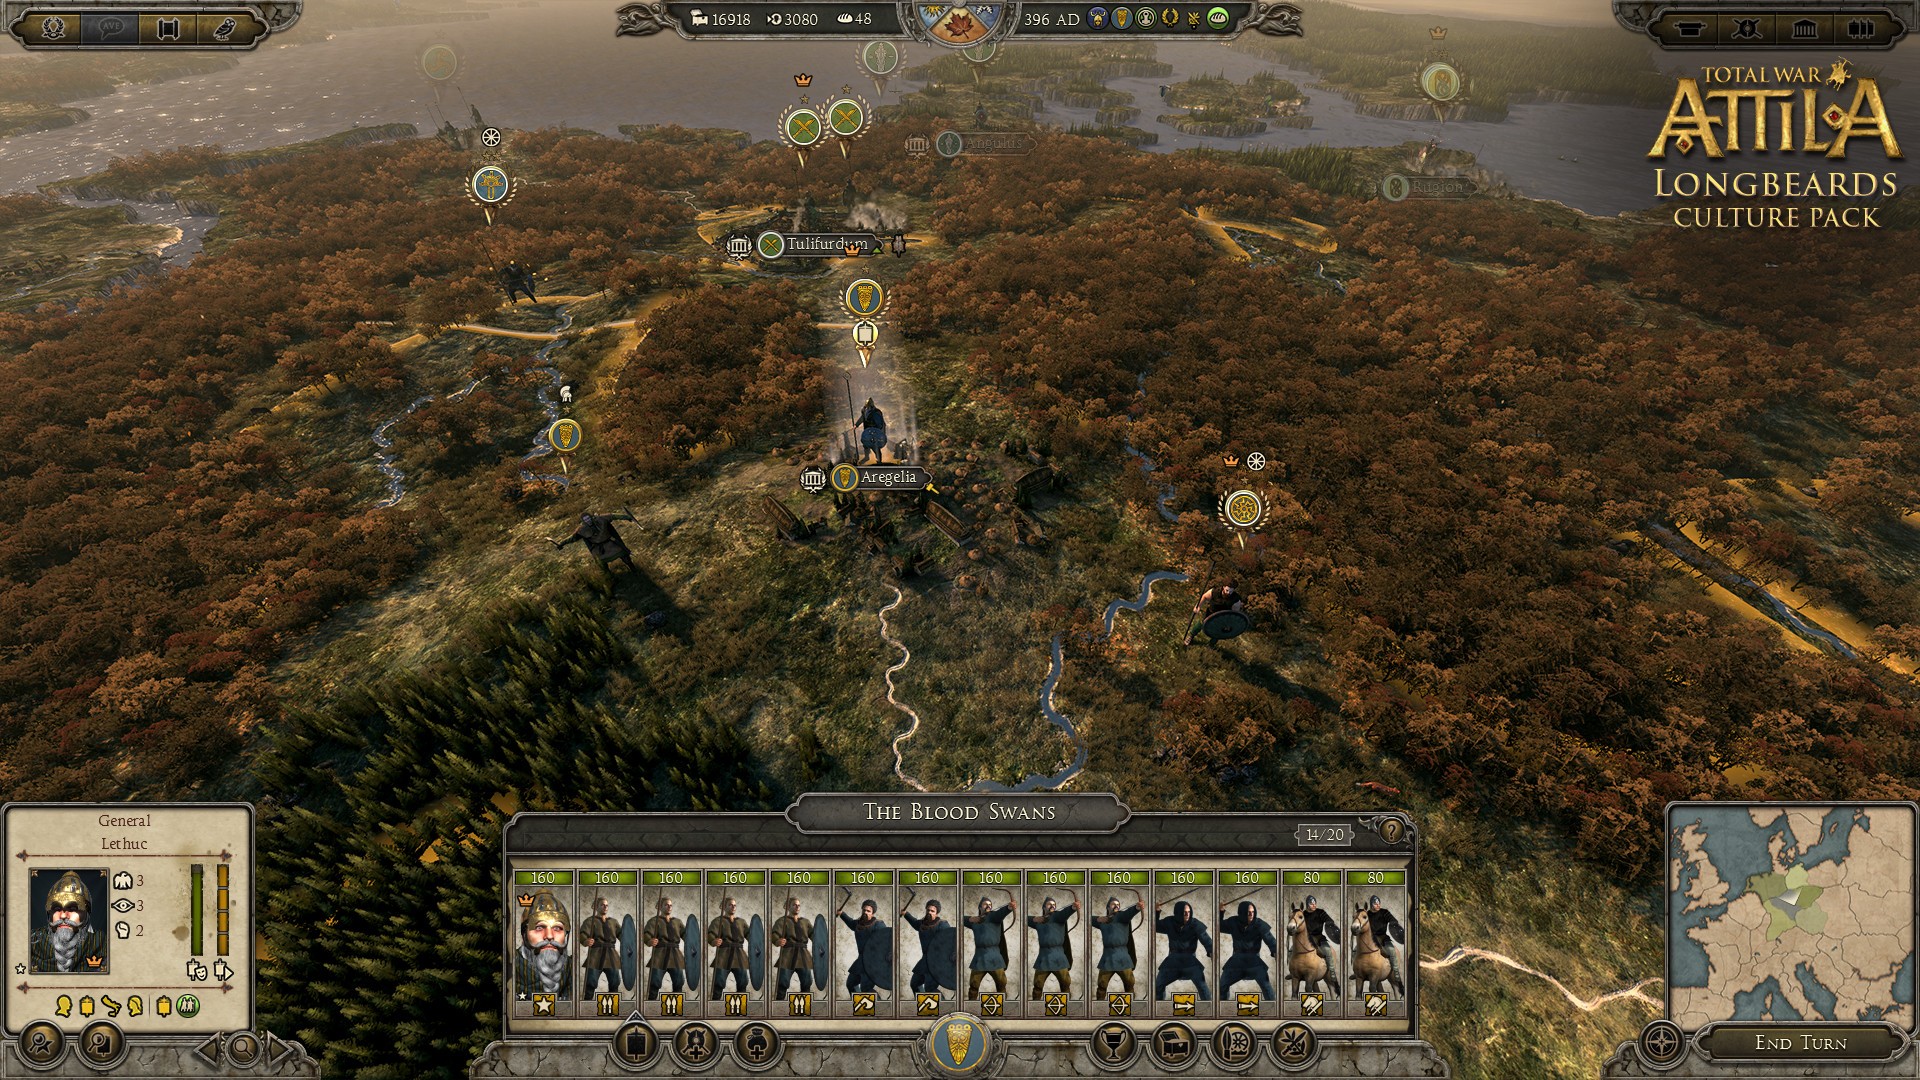 Total war: attila - longbeards culture pack download free download